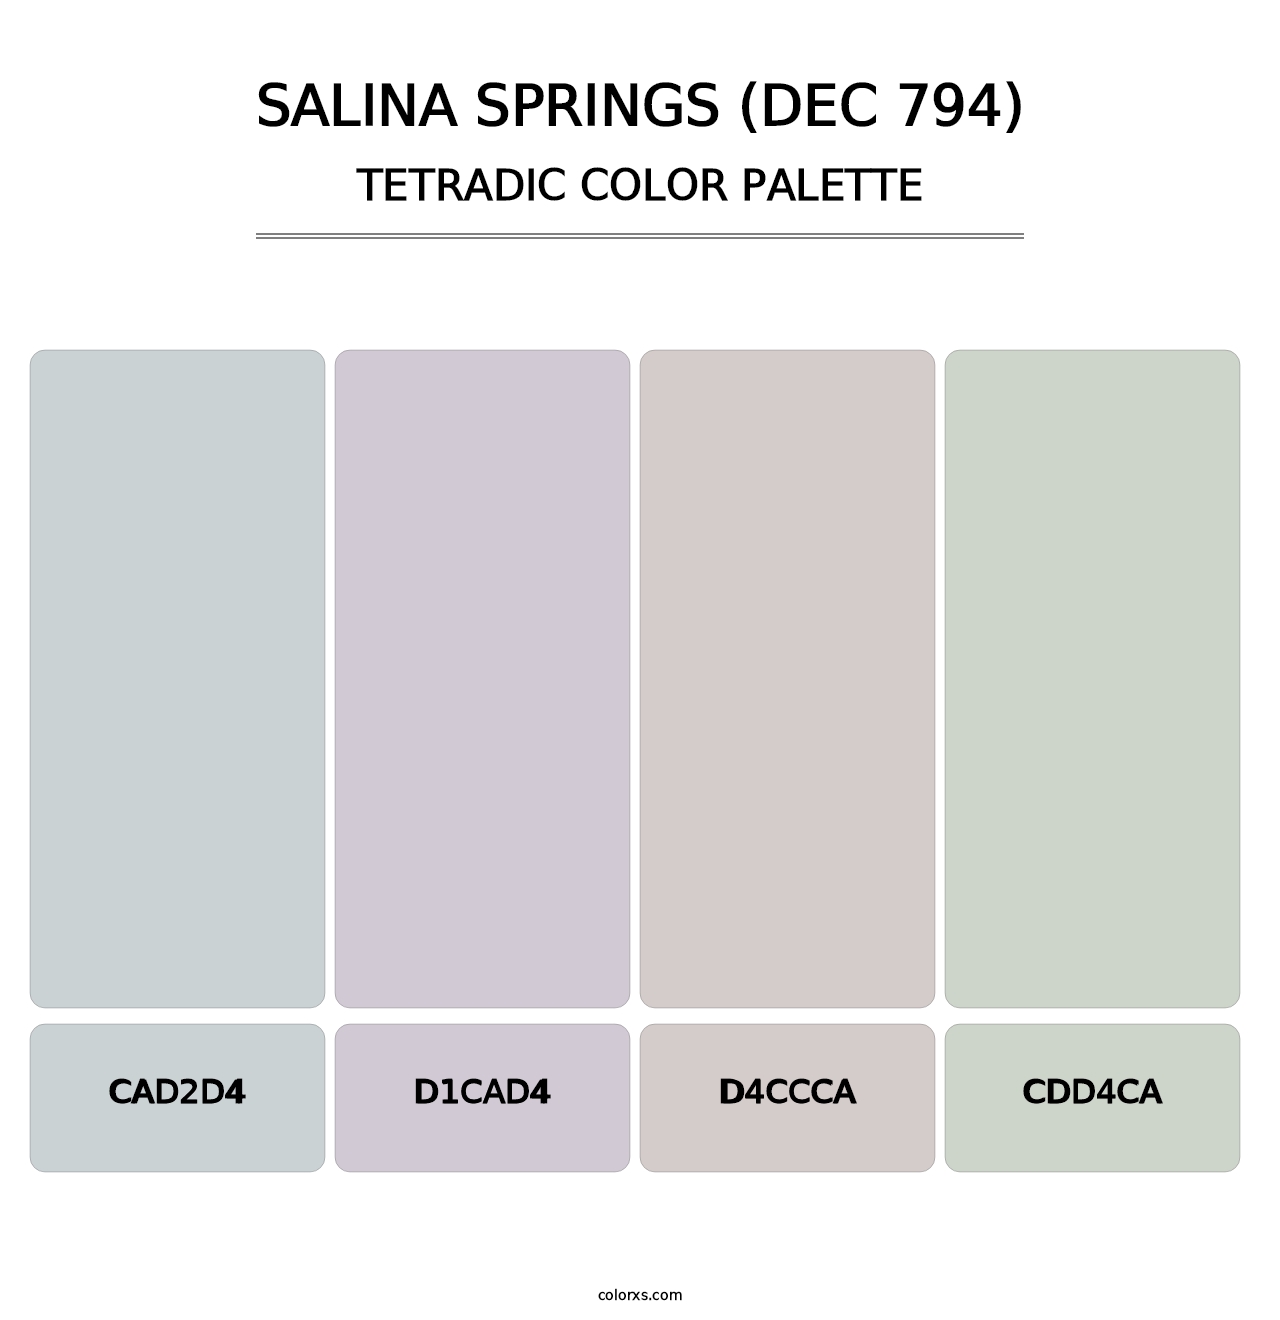 Salina Springs (DEC 794) - Tetradic Color Palette